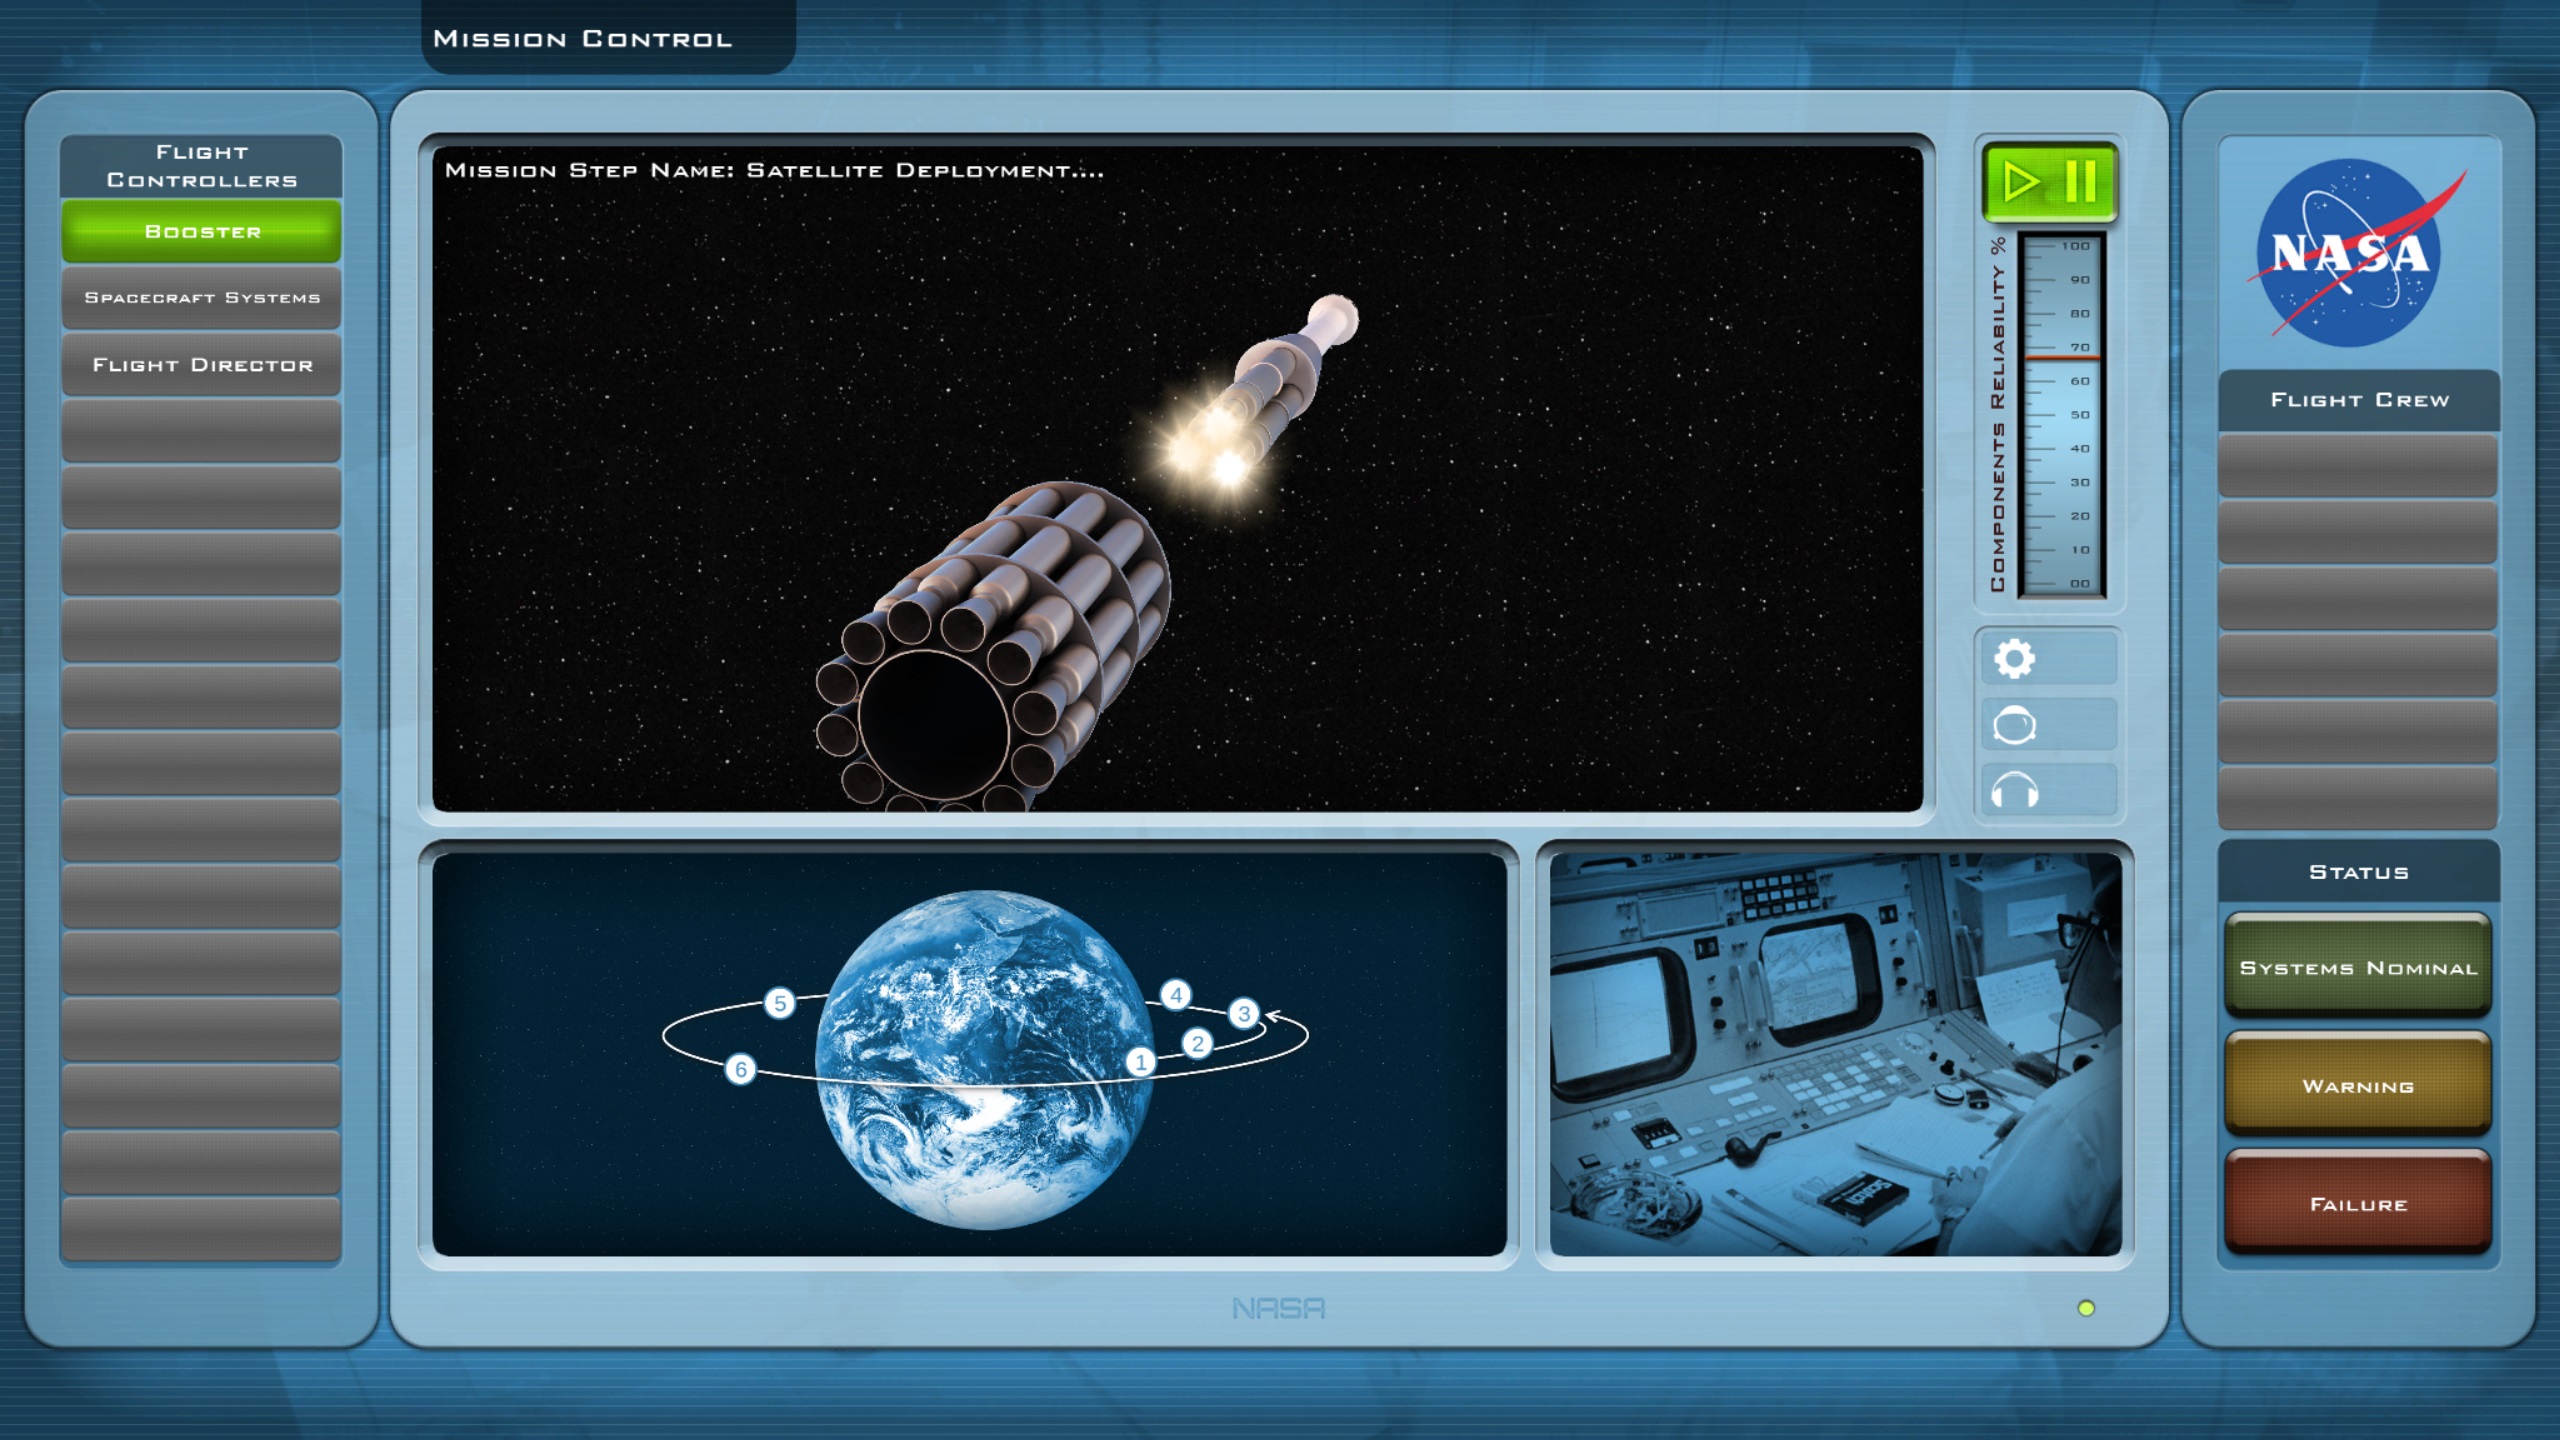 Buzz Aldrin's Space Program Manager screenshot